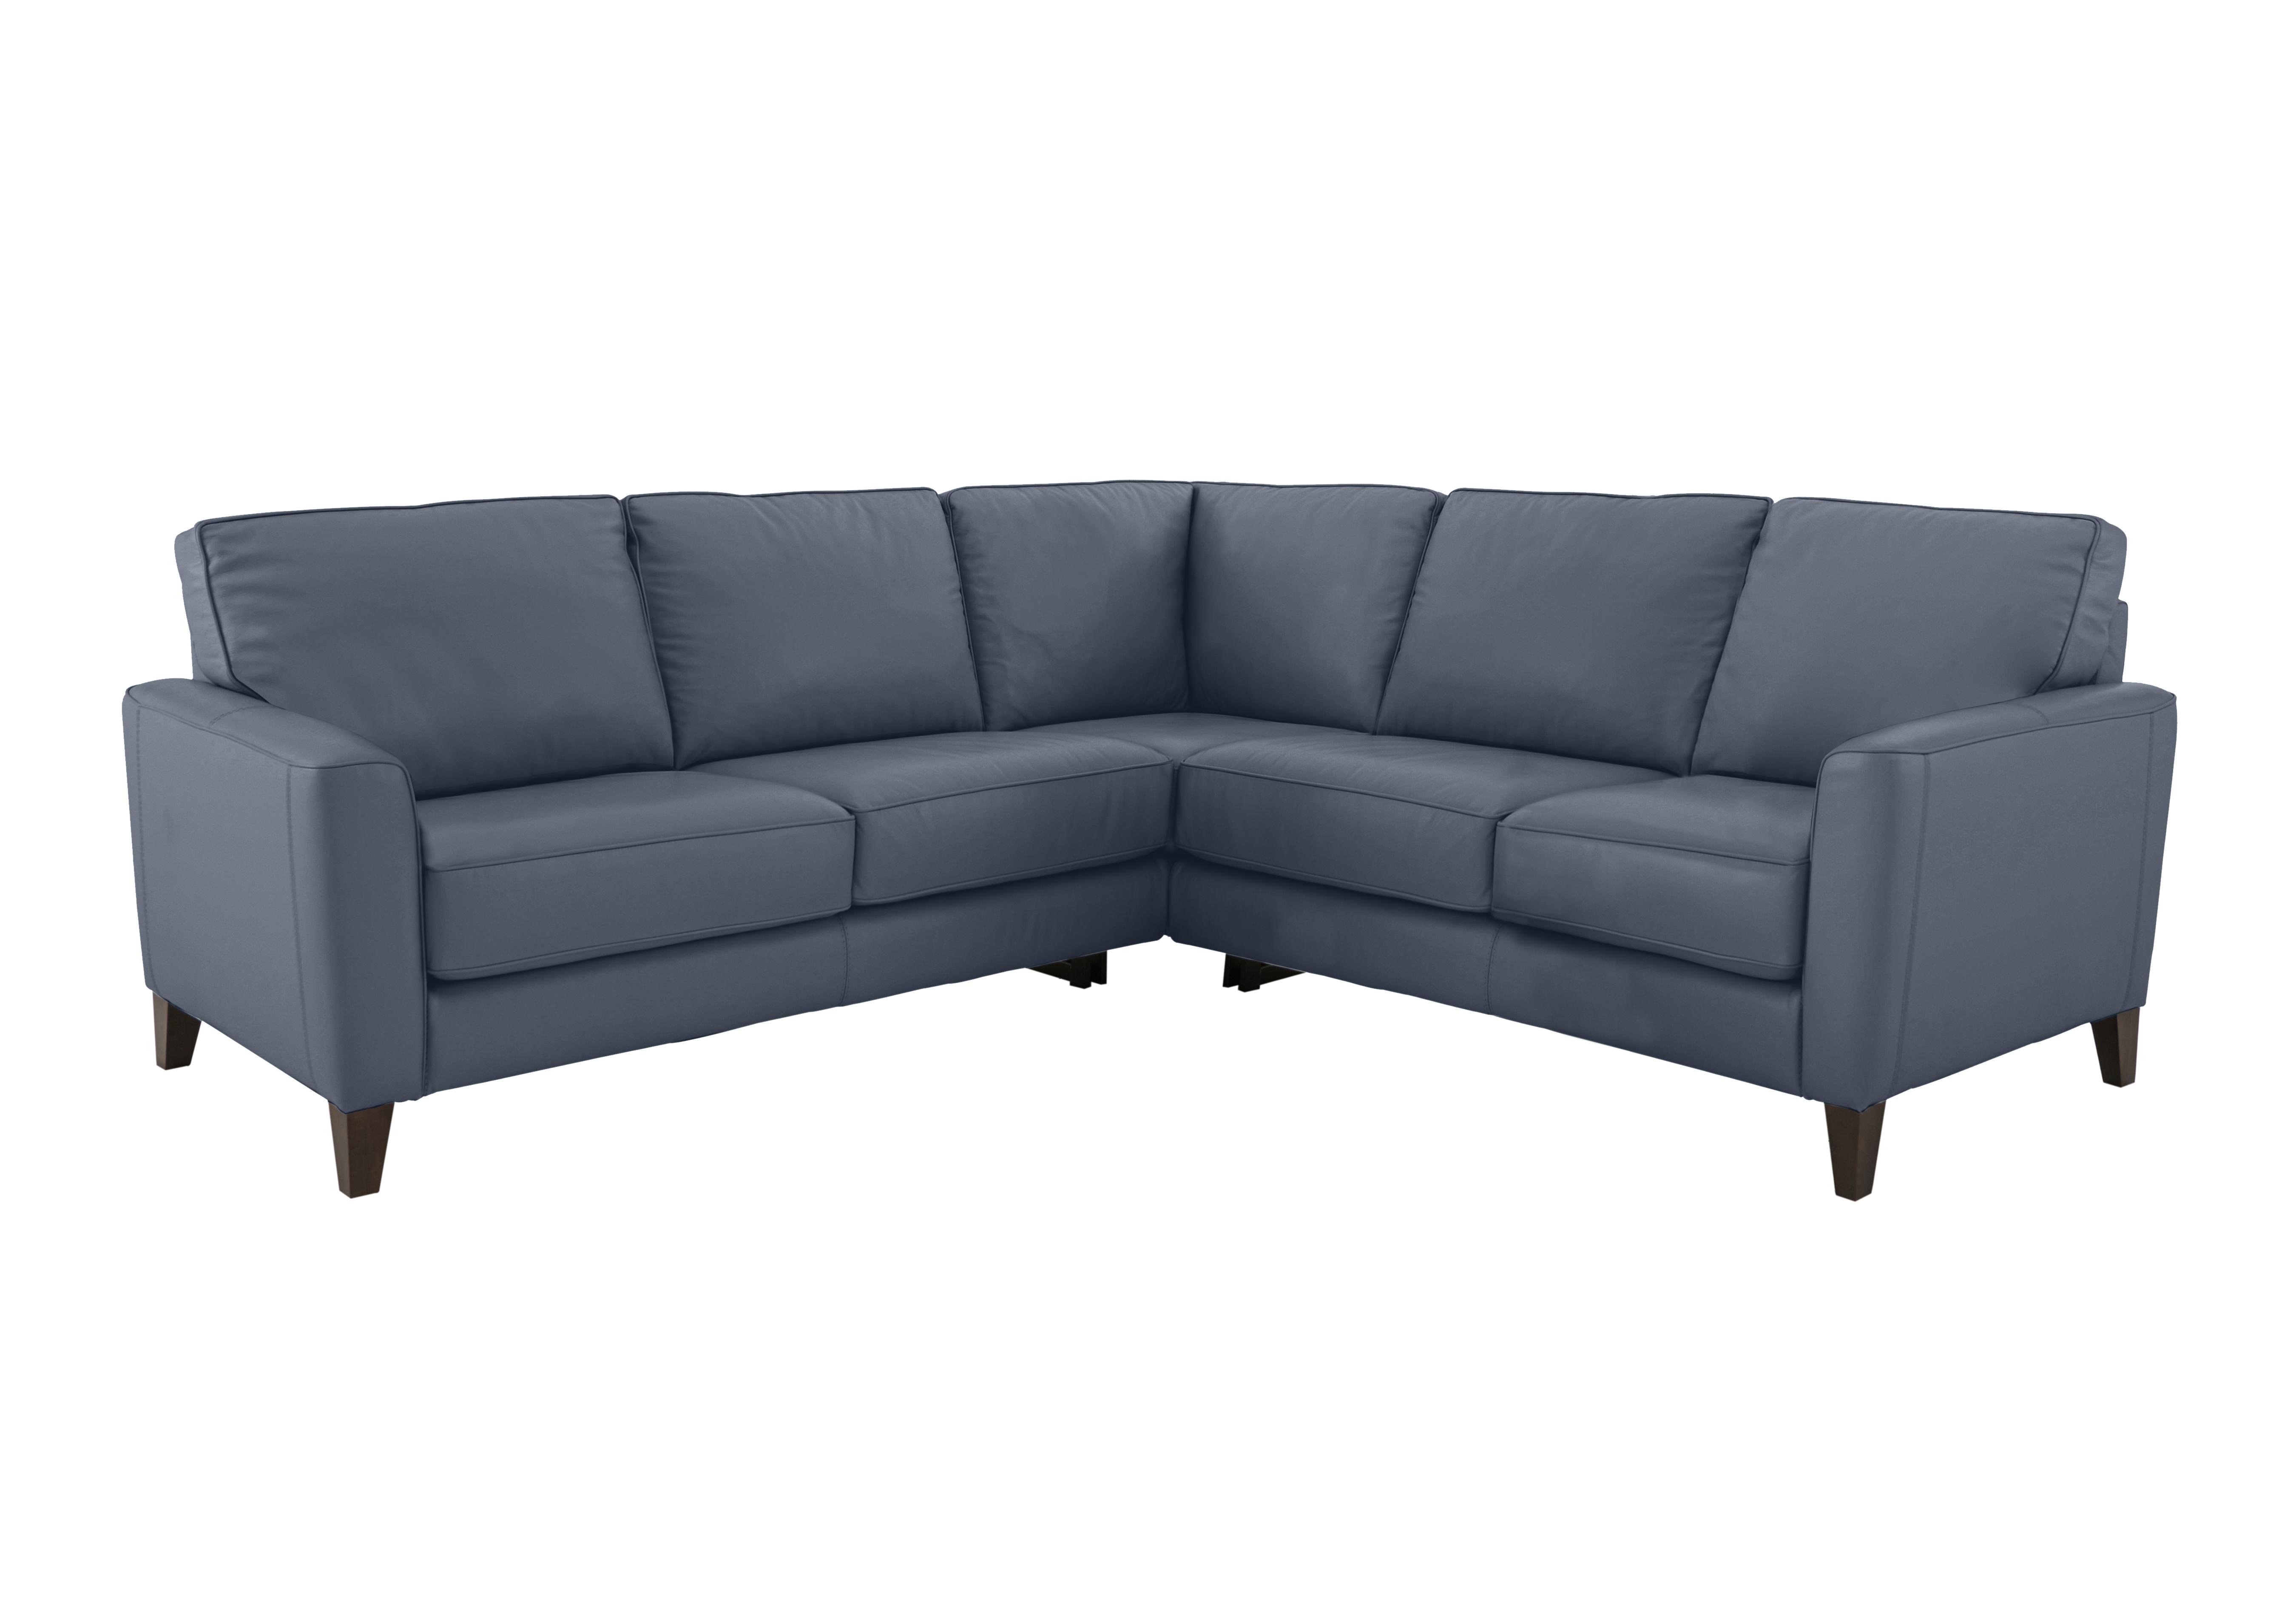 Brondby Large Leather Corner Sofa in Bv-313e Ocean Blue on Furniture Village